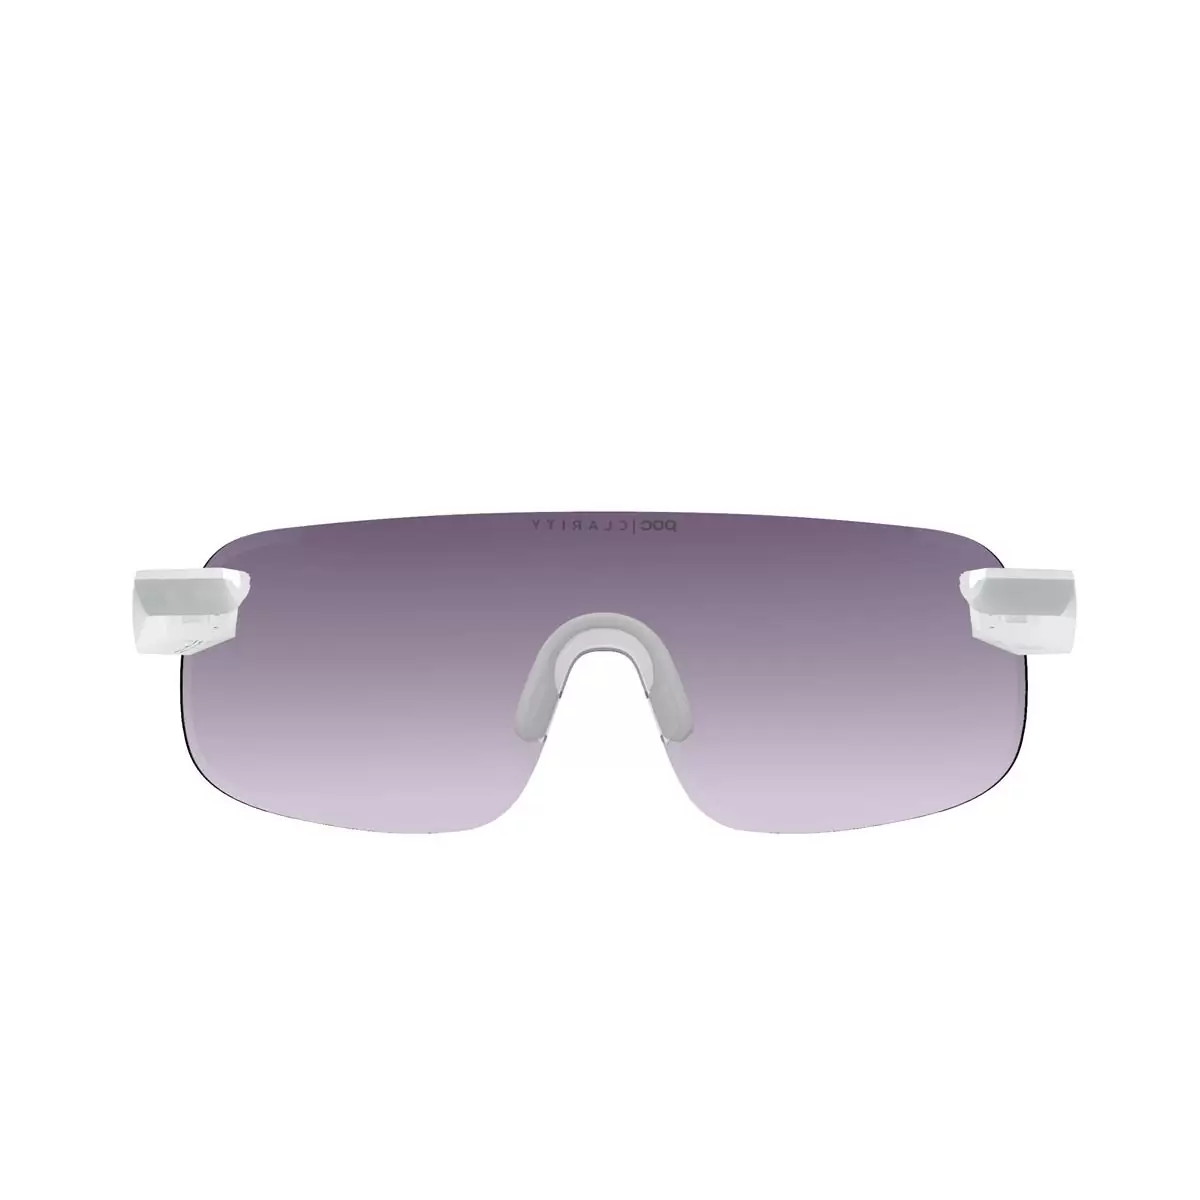 Elicit Sunglasses Hydrogen White/Violet Silver Mirror #3